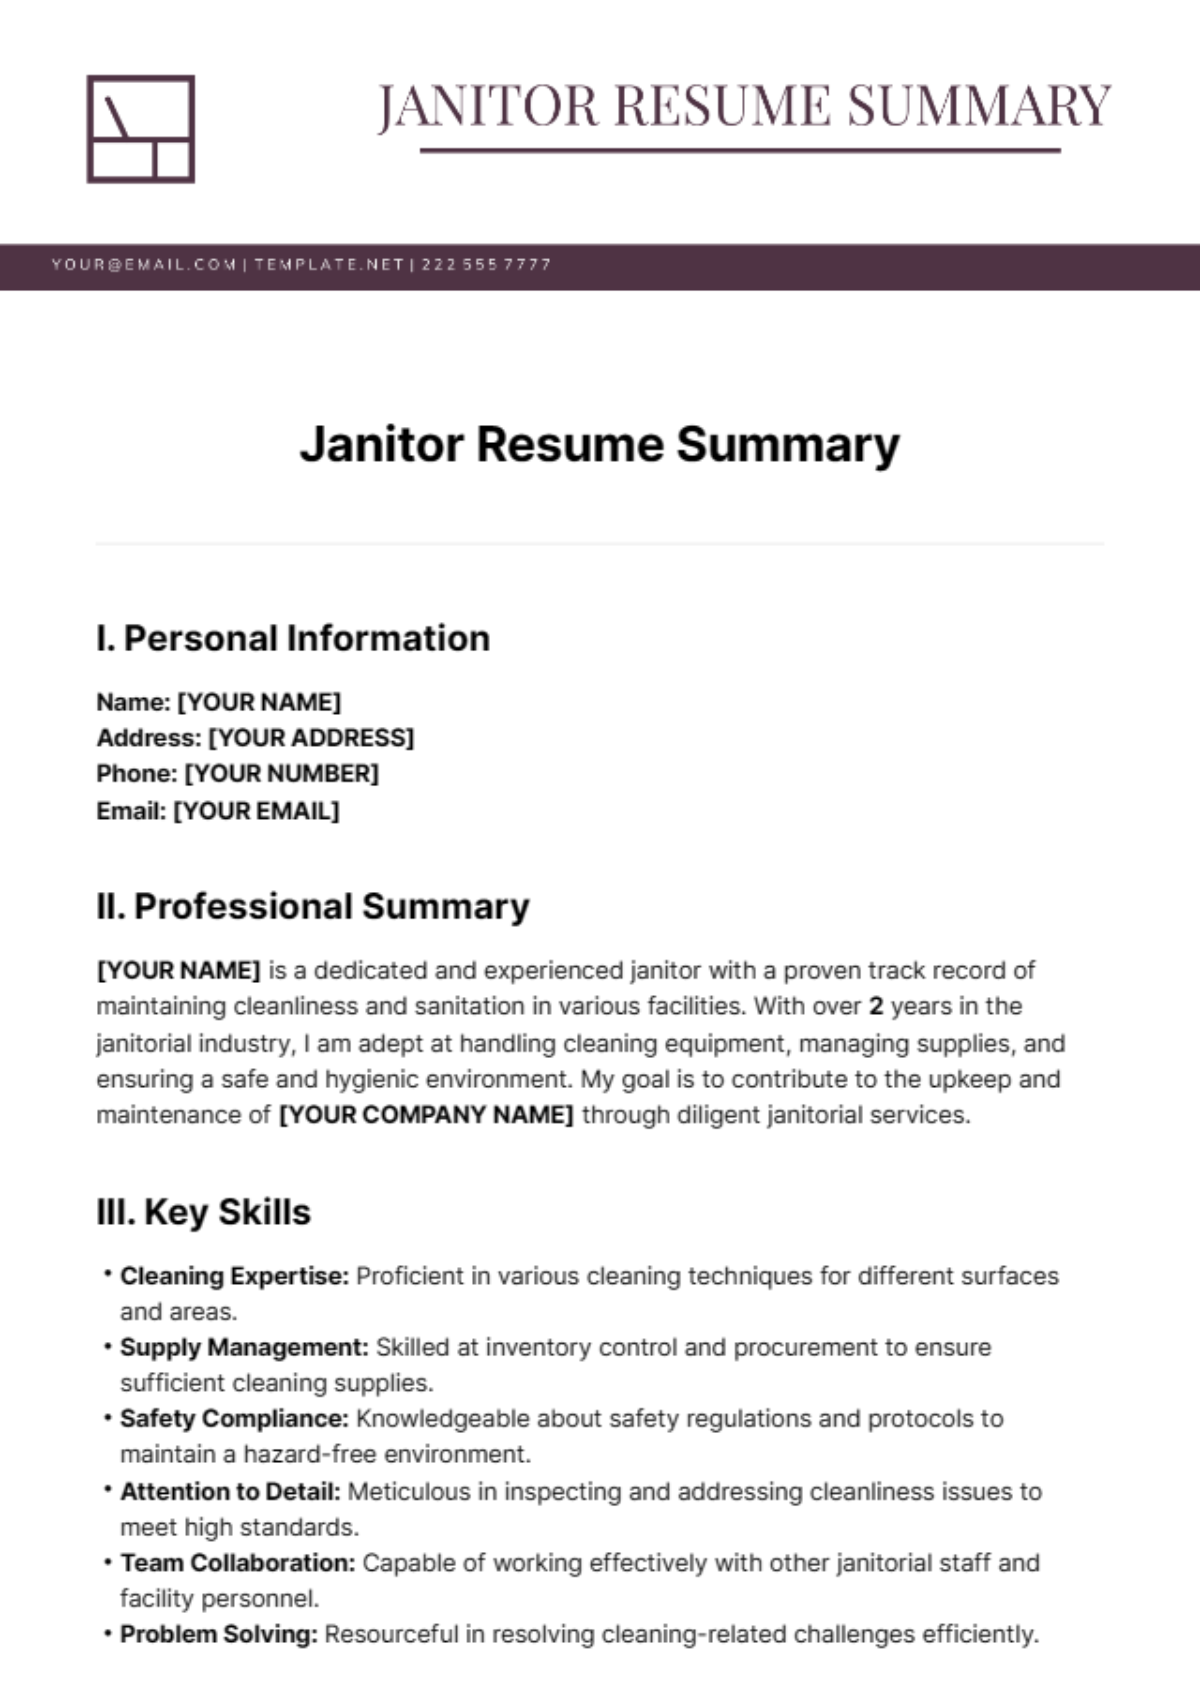 Janitor Resume Summary Template